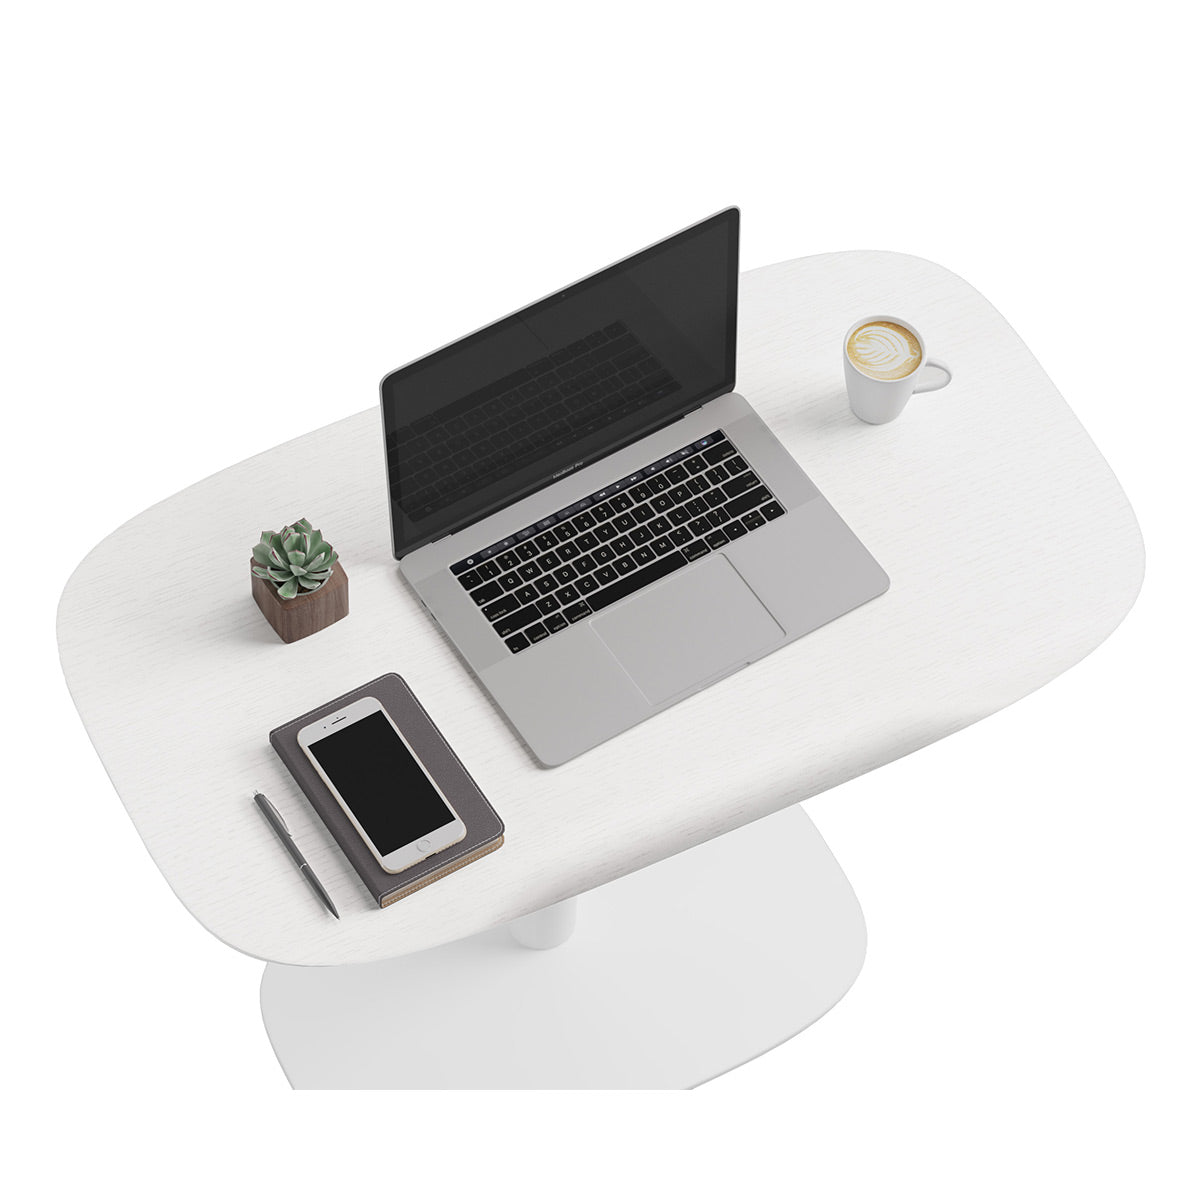 BDI Soma 6331 Compact Lift Desk (Satin White)